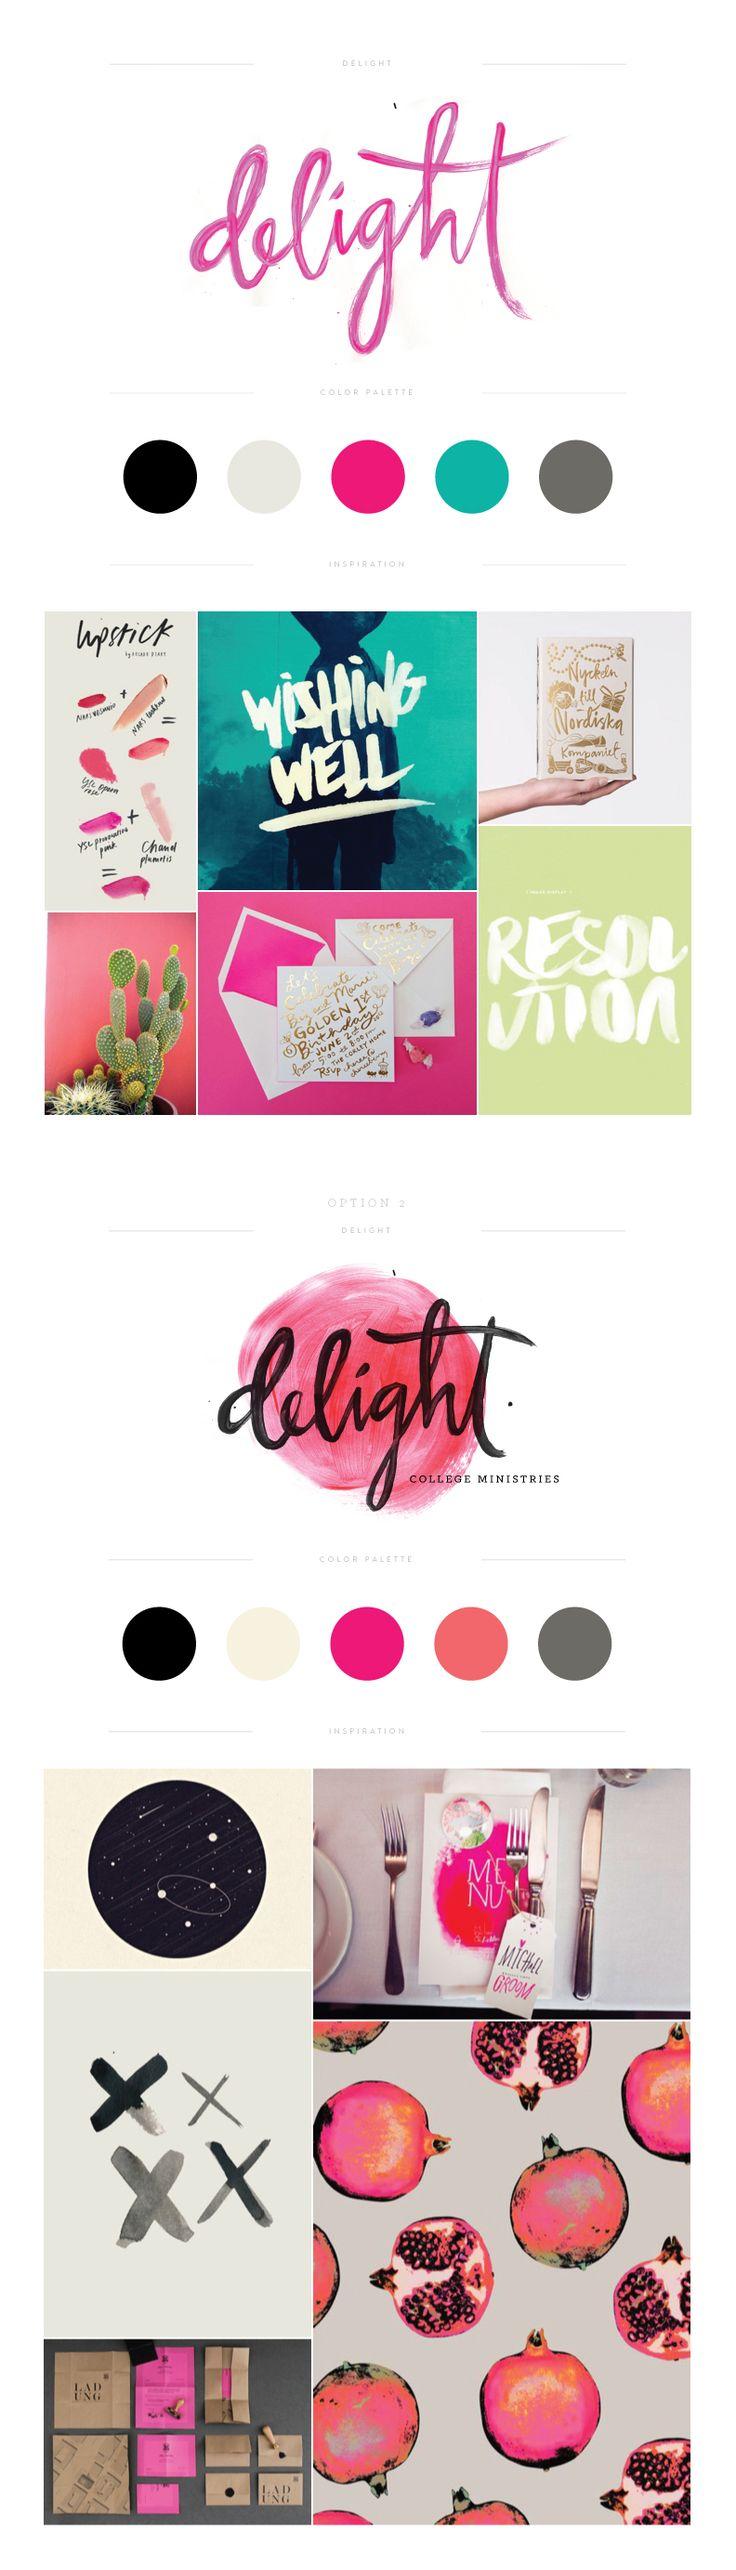 Hochzeit - Delight — Lauren Ledbetter Design & Styling